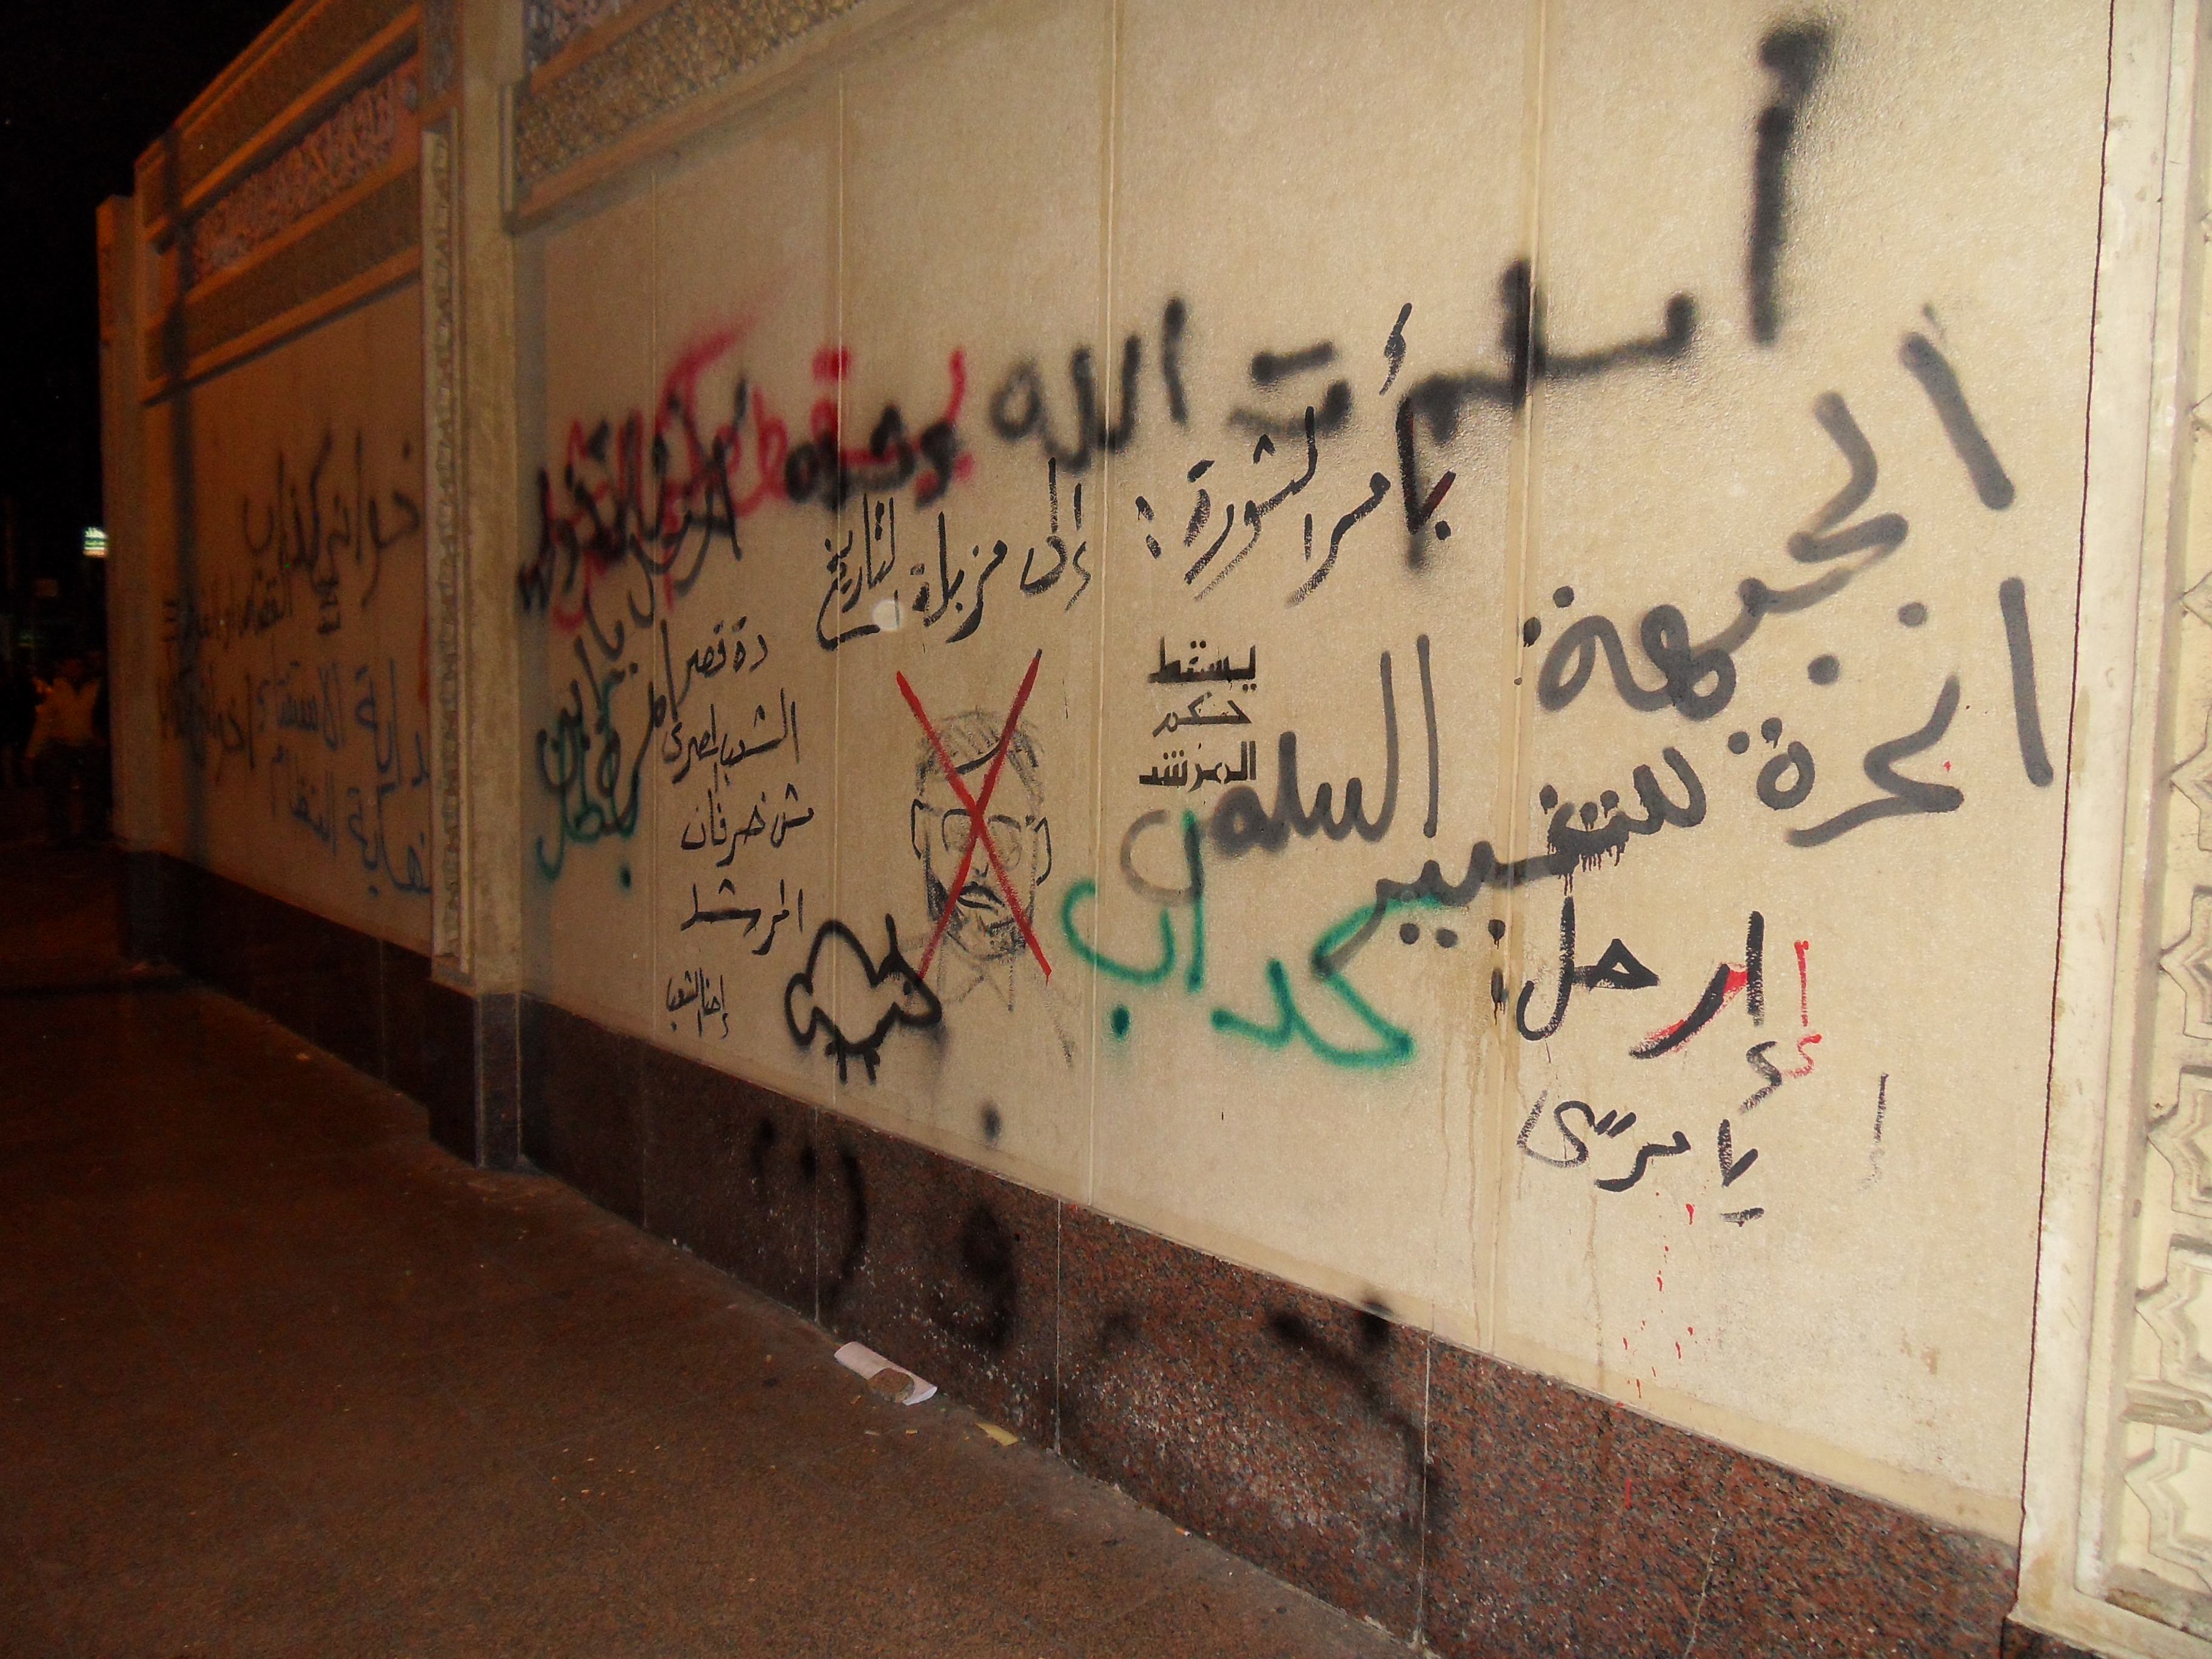 Graffiti on the walls of the Palace.